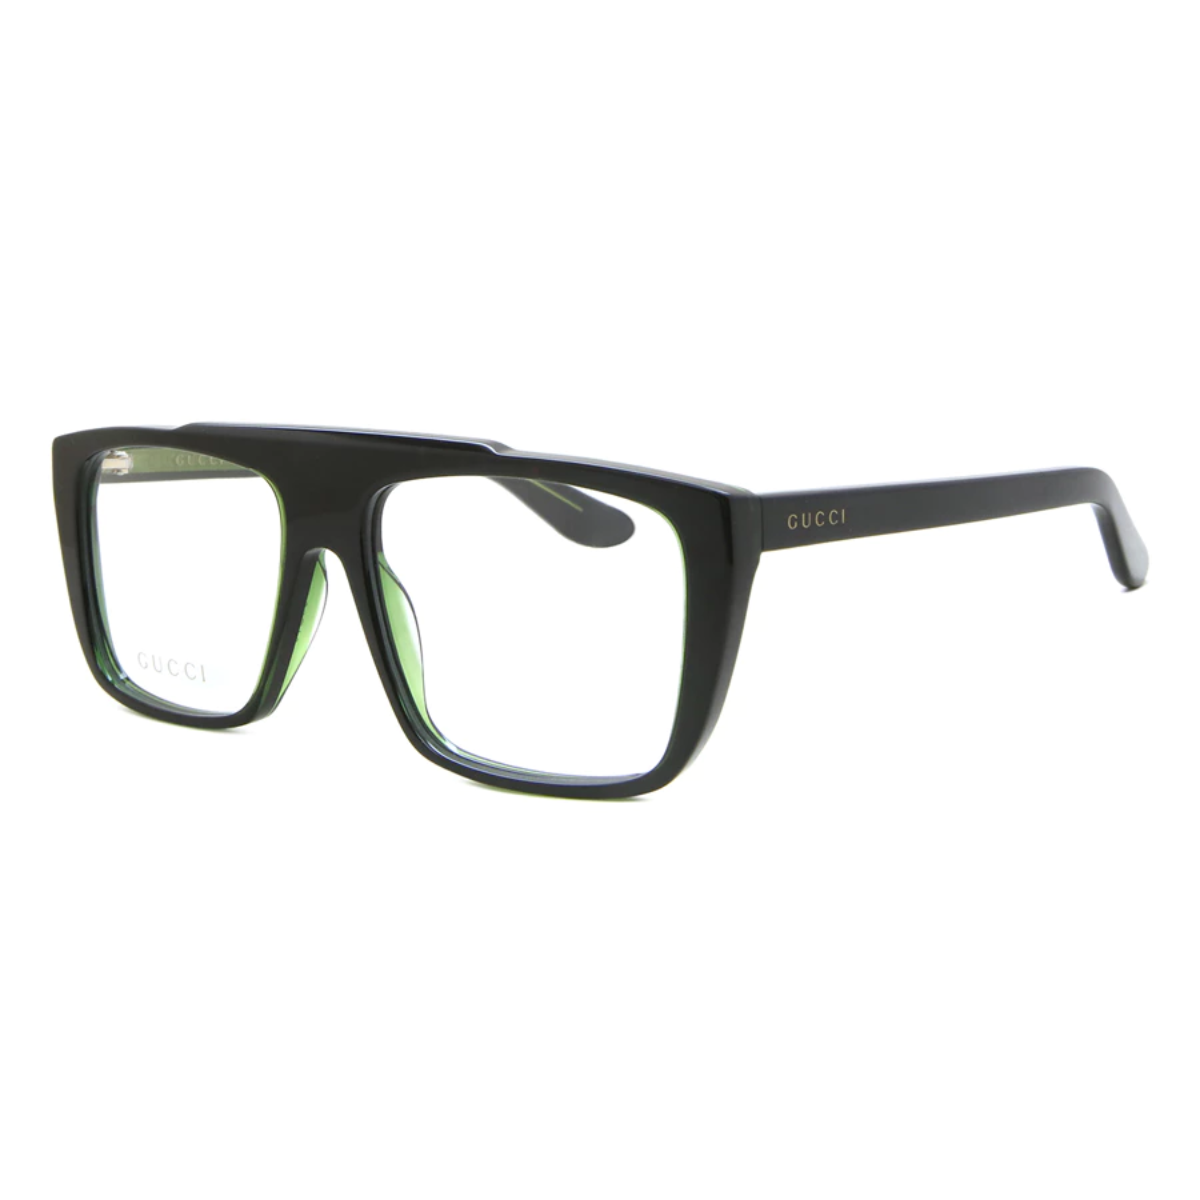 "Gucci 1040O Eyeglass Frames: Optorium's Premium Collection for Men"